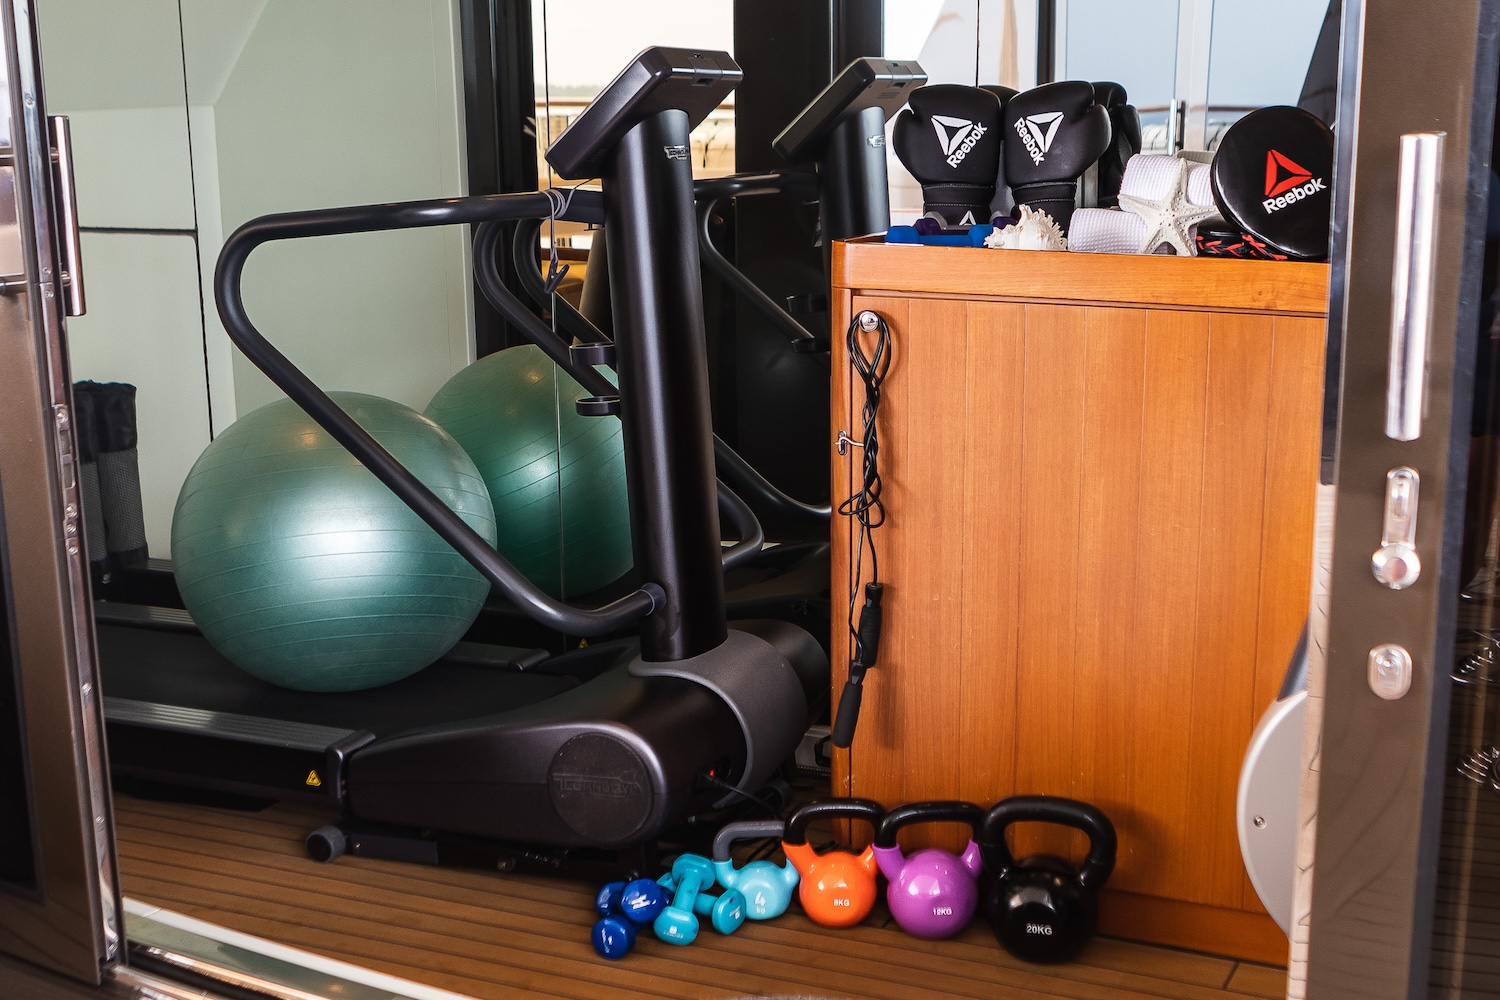 St David yacht gym equipment and treadmill